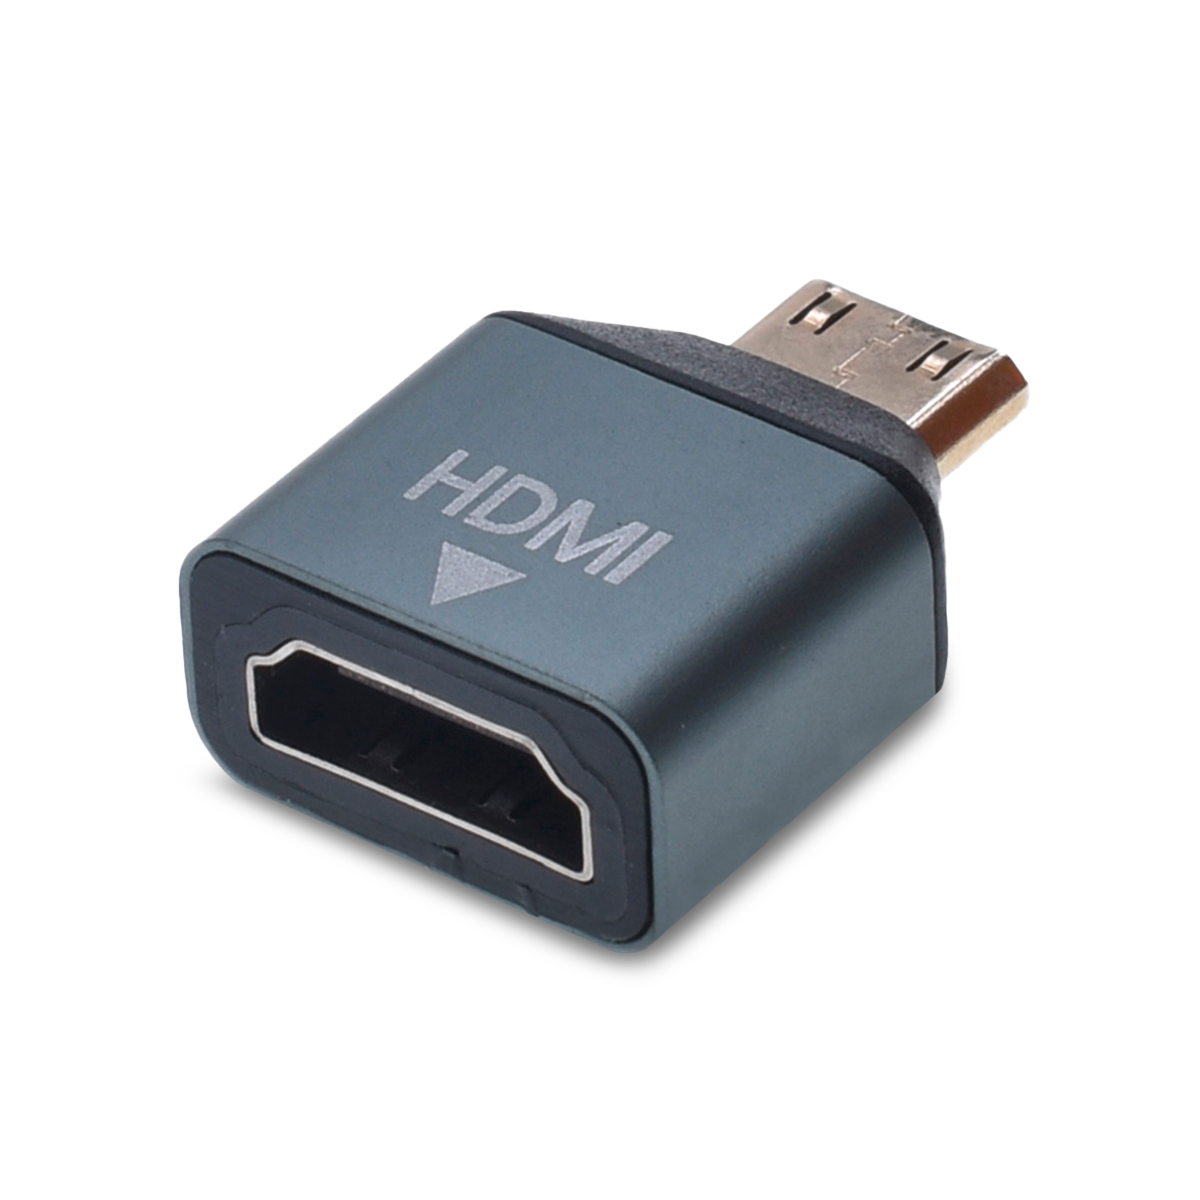 Adaptador HDMI Hembra a Mini HDMI Macho - Cables HDMI® y Adaptadores HDMI